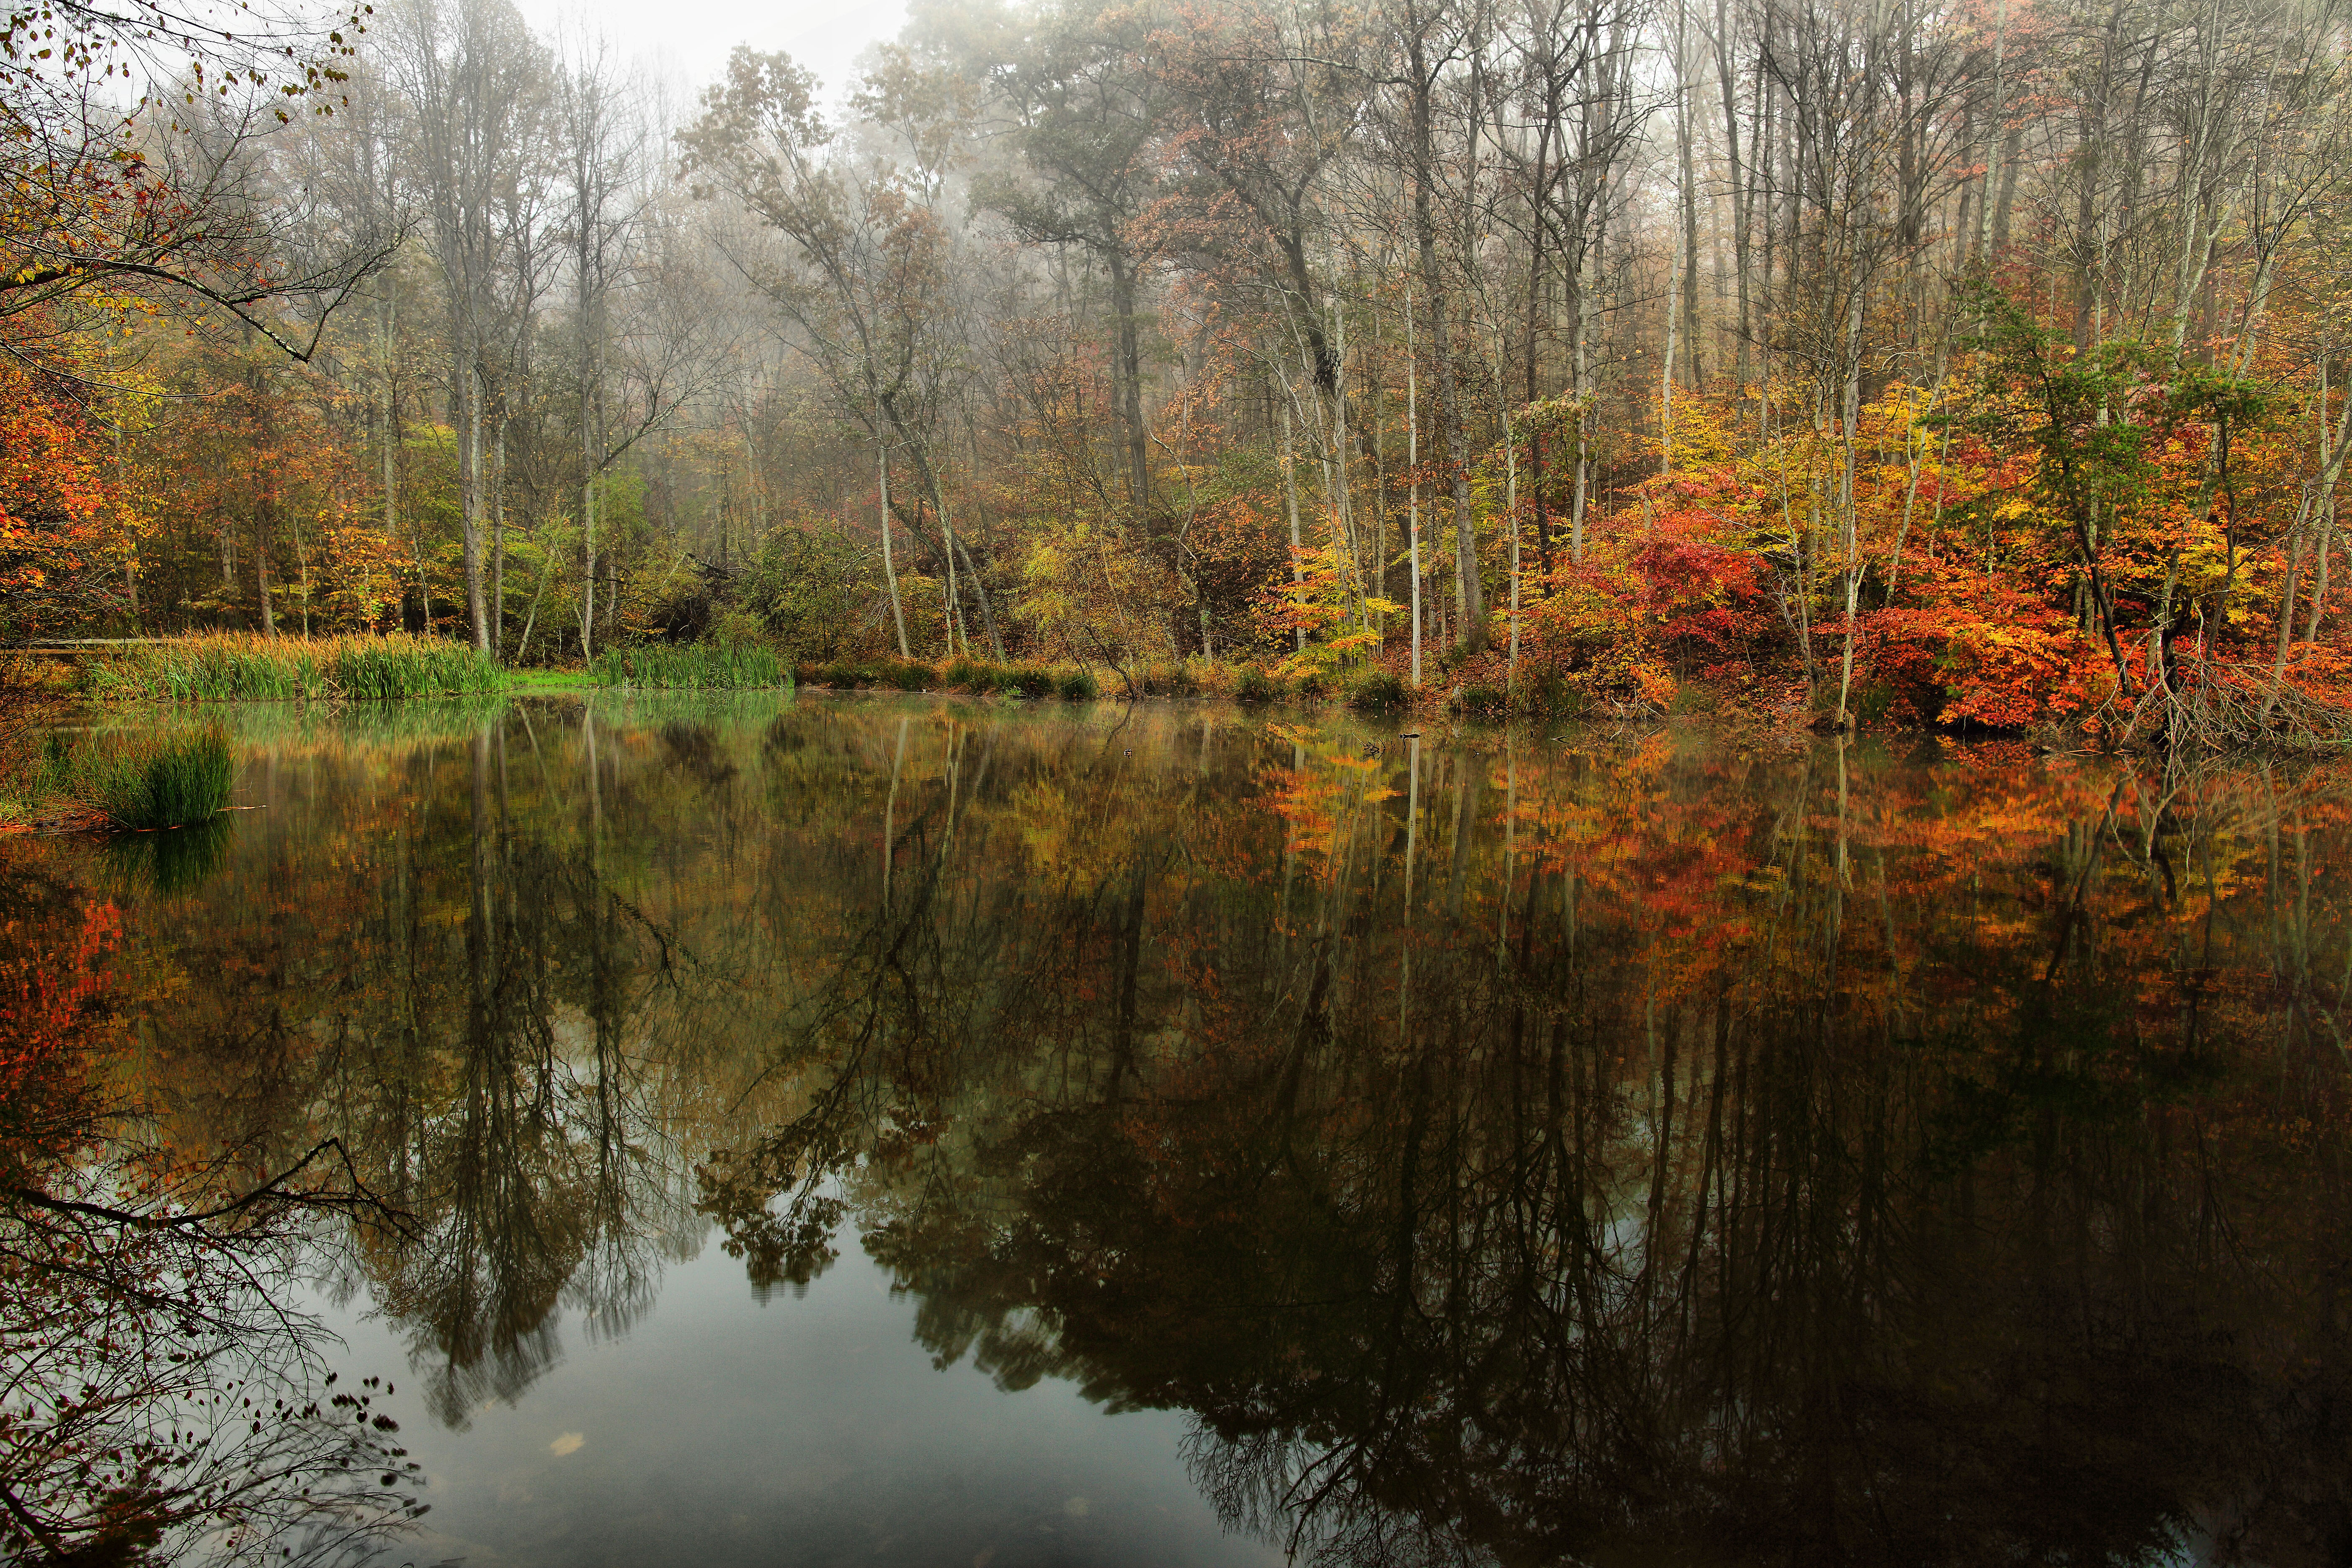 File:Foggy-autumn-lake - Virginia - ForestWander.jpg - Wikimedia Commons